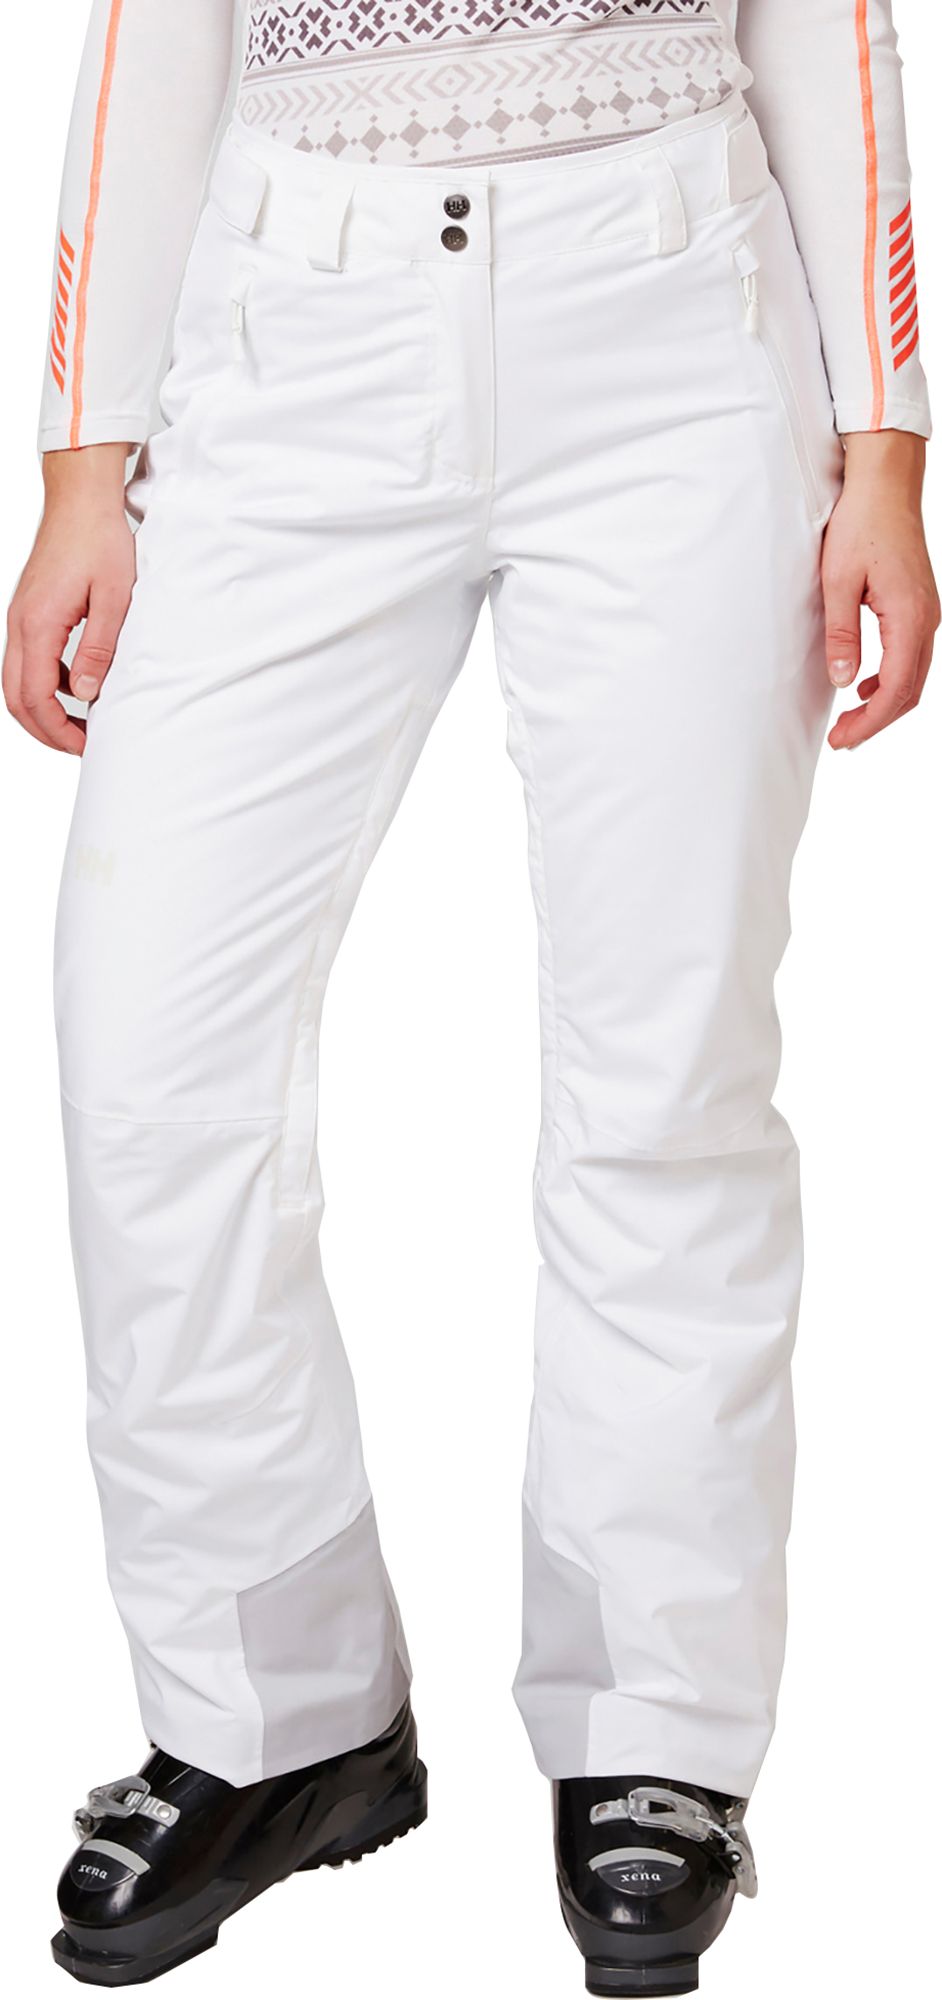 Photos - Ski Wear Helly Hansen Women's Legendary Insulated Pants, Medium, White 21HLYWWMNSLG 